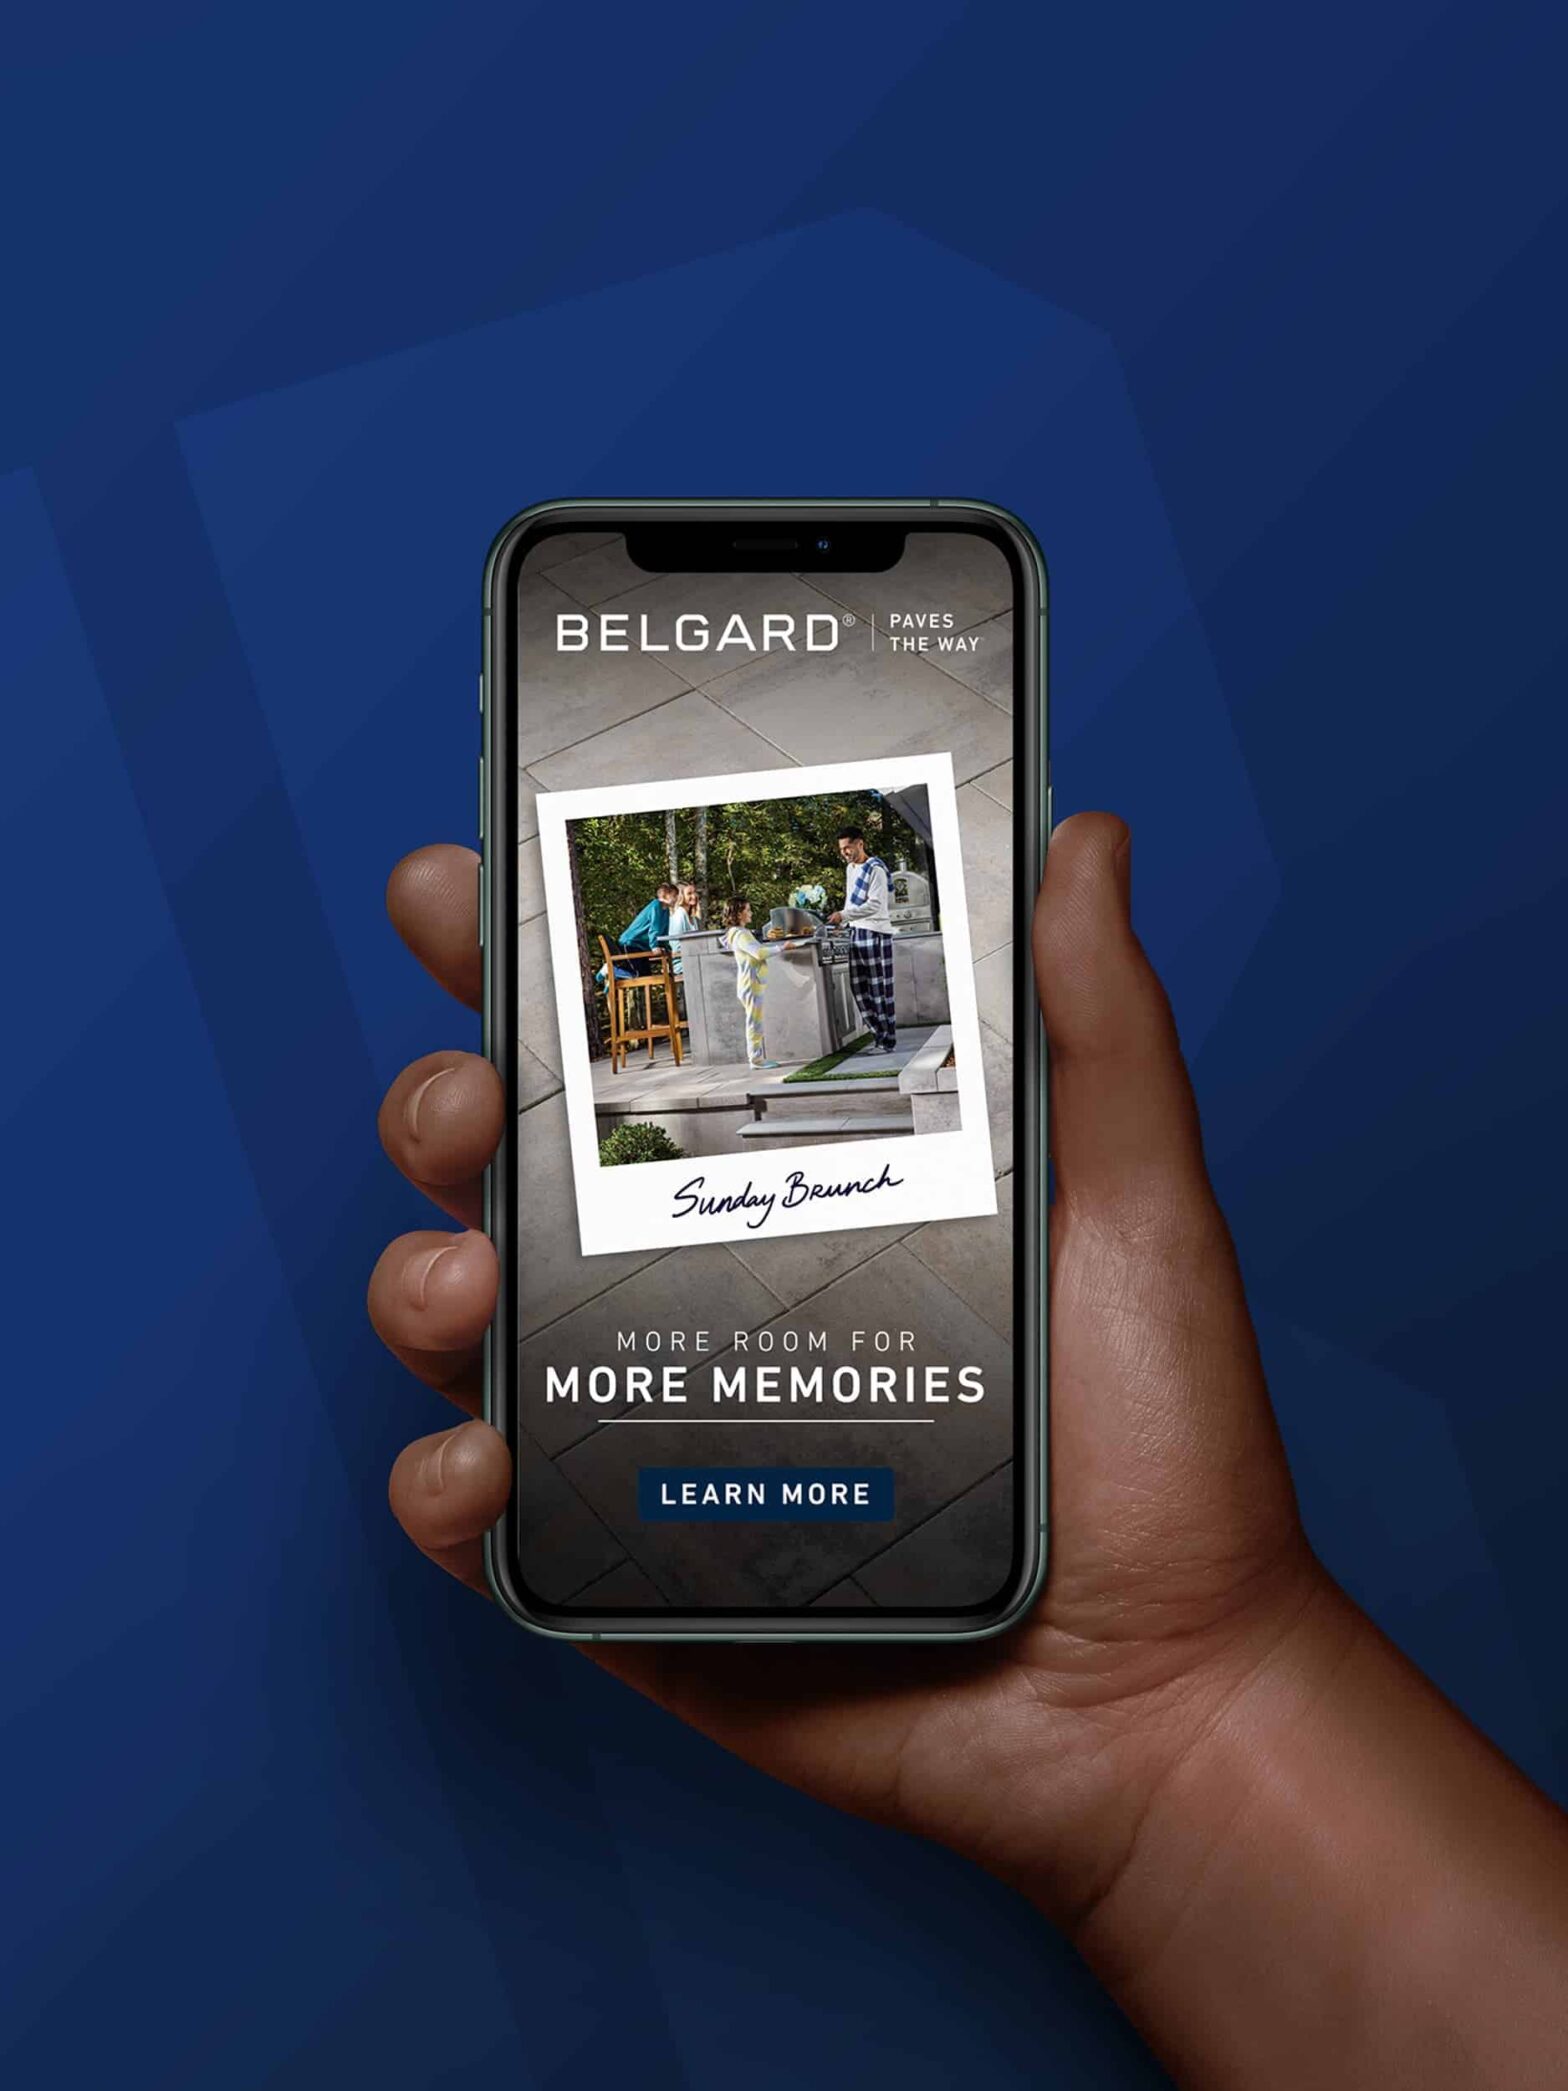 Belgard Rooms digital ad mocked up in a phone.